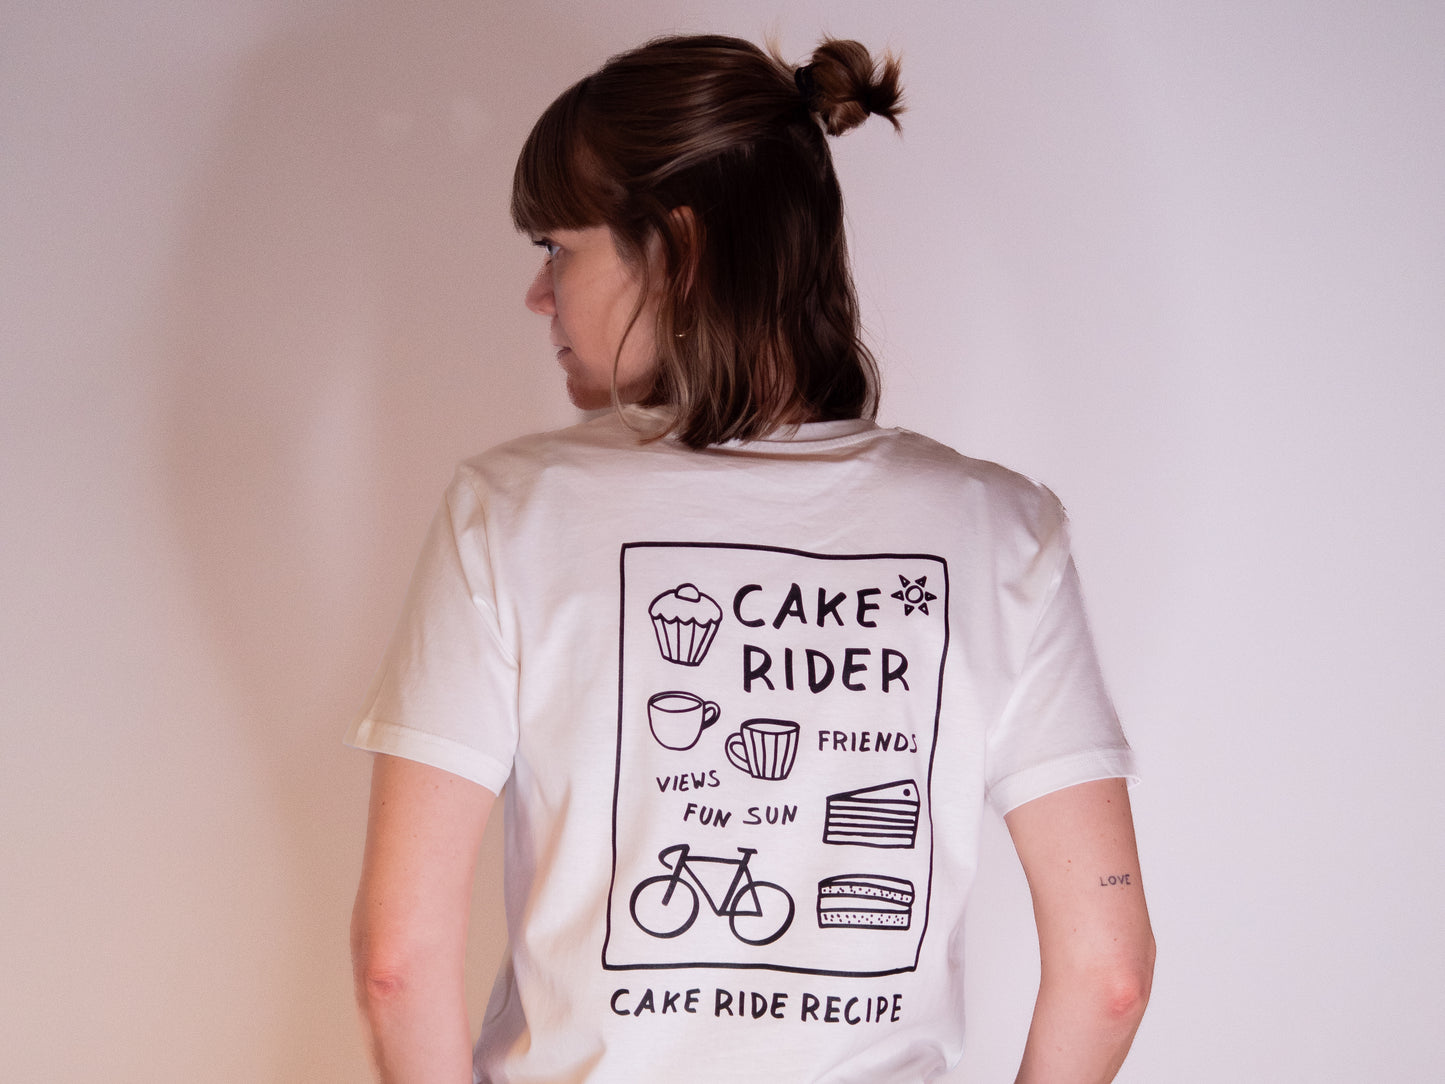 "Cake Ride Recipe" Unisex T-Shirt, White Sugar